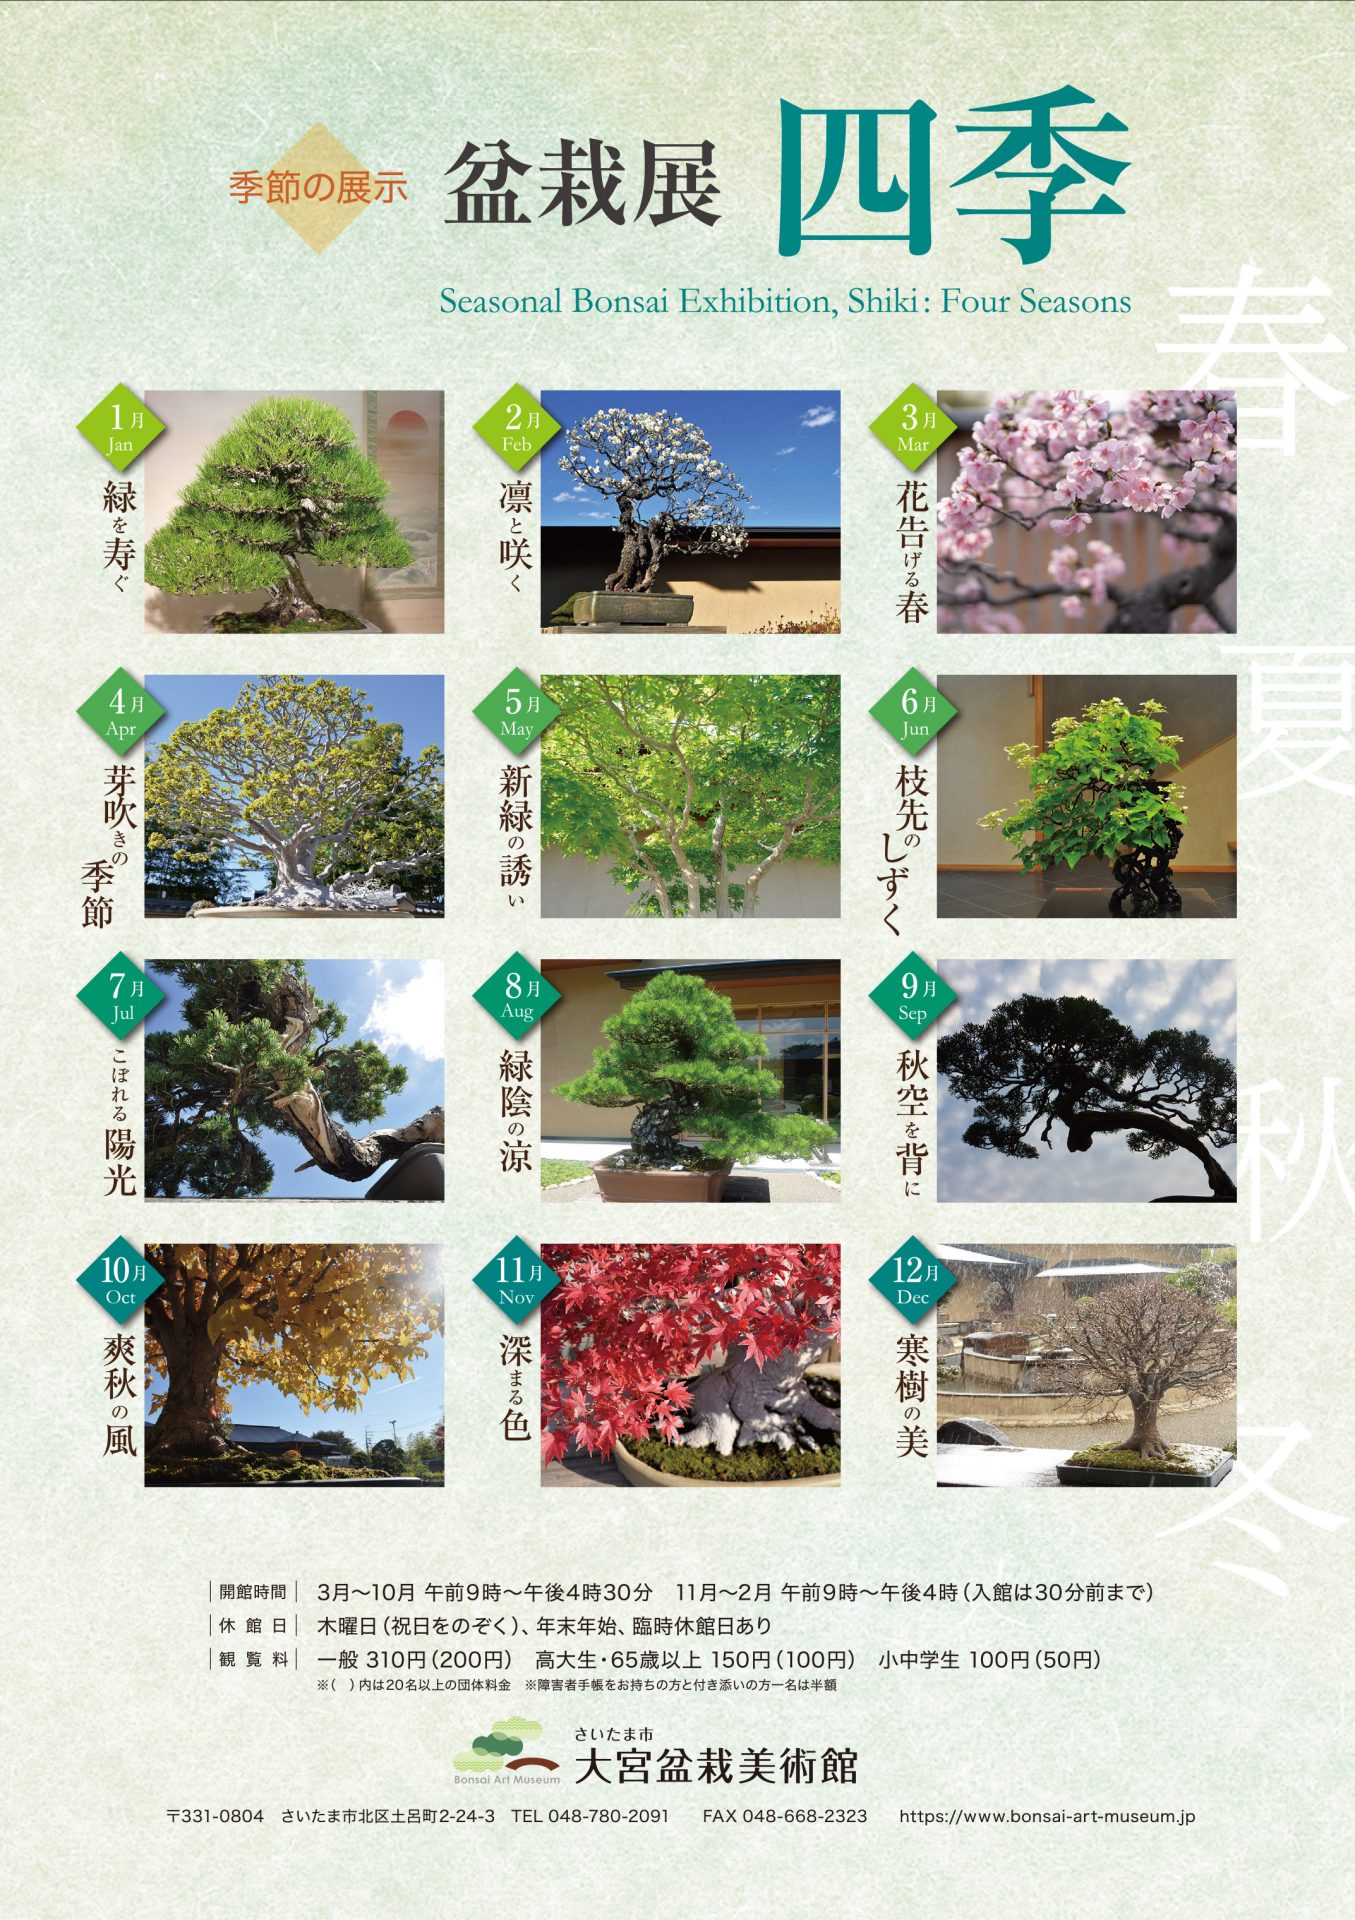 Seasonal Bonsai Exhibition, Shiki: Four Seasons, February, Bloom Gallantly